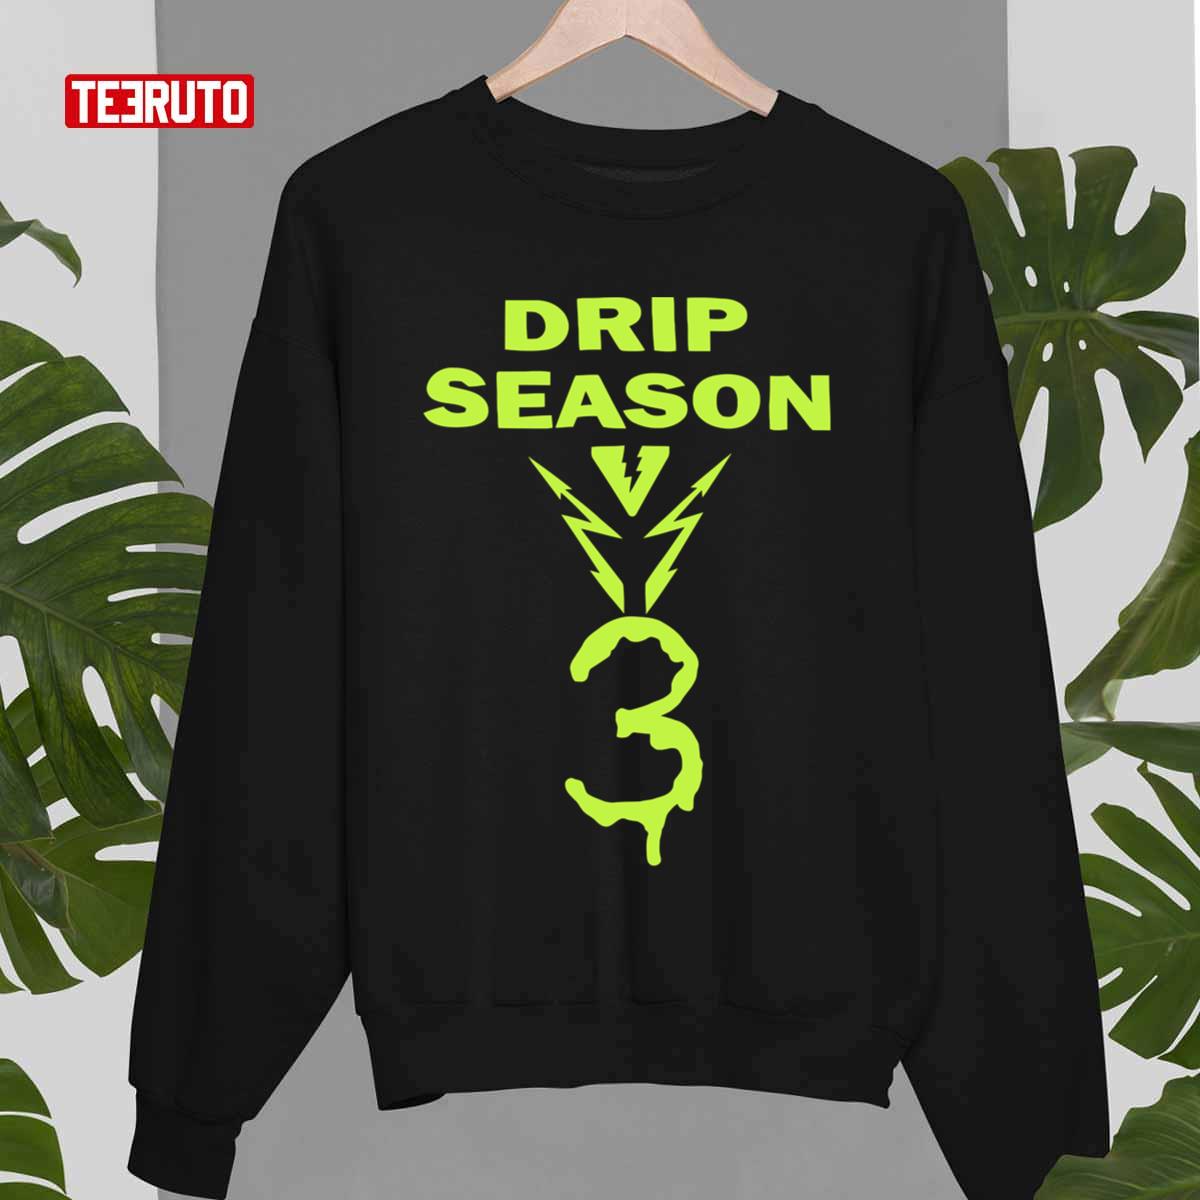 Gunna Drip Season Neon Unisex T-Shirt